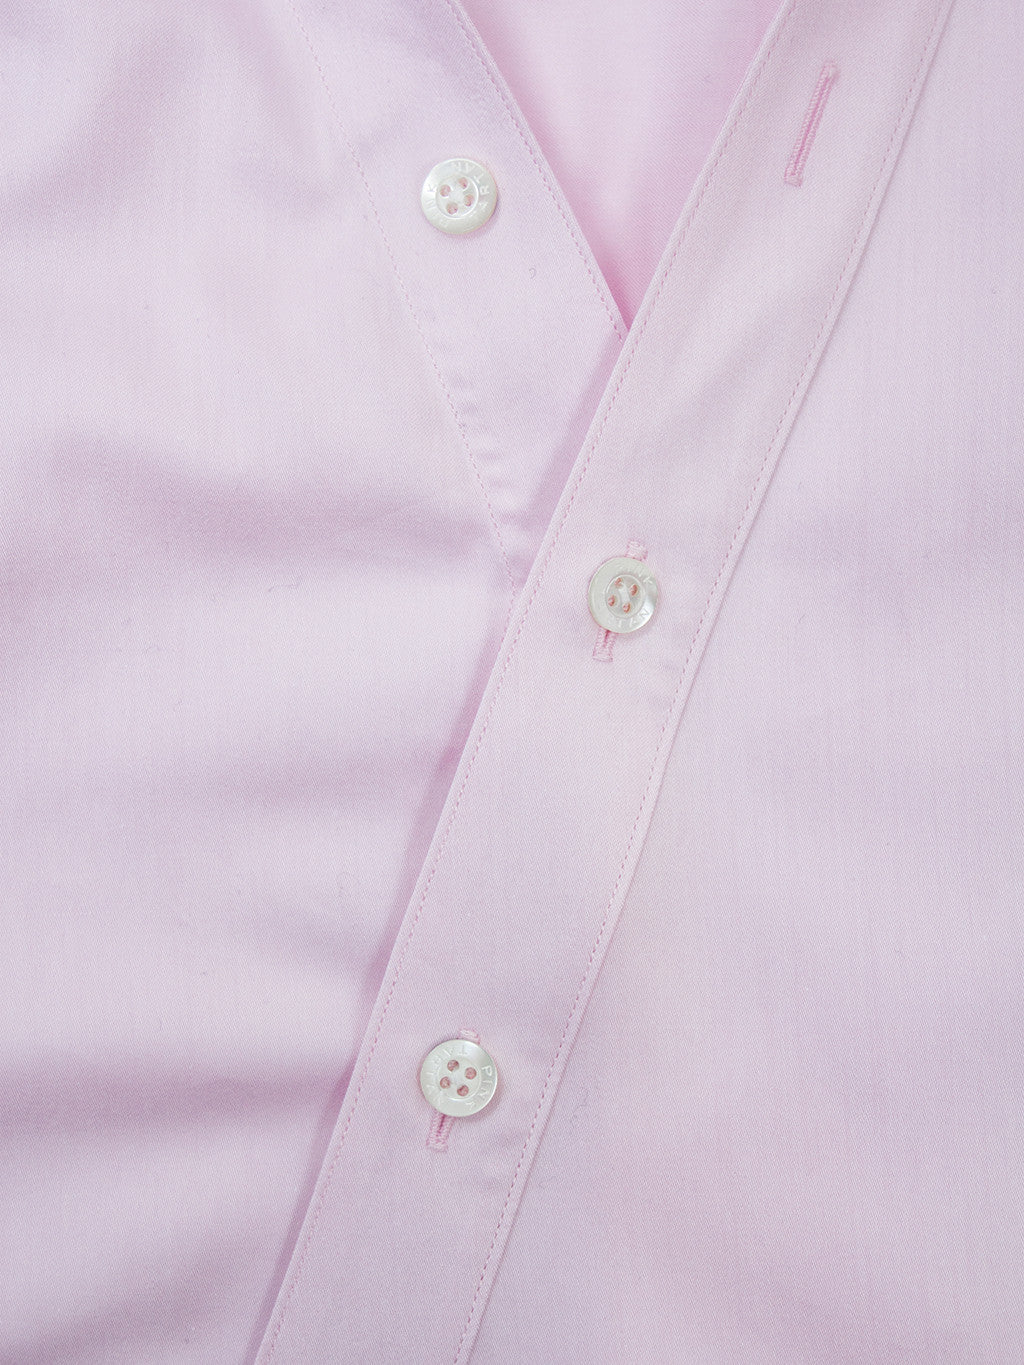 Asymmetric Tailored Shirt - Pink Pink Tartan